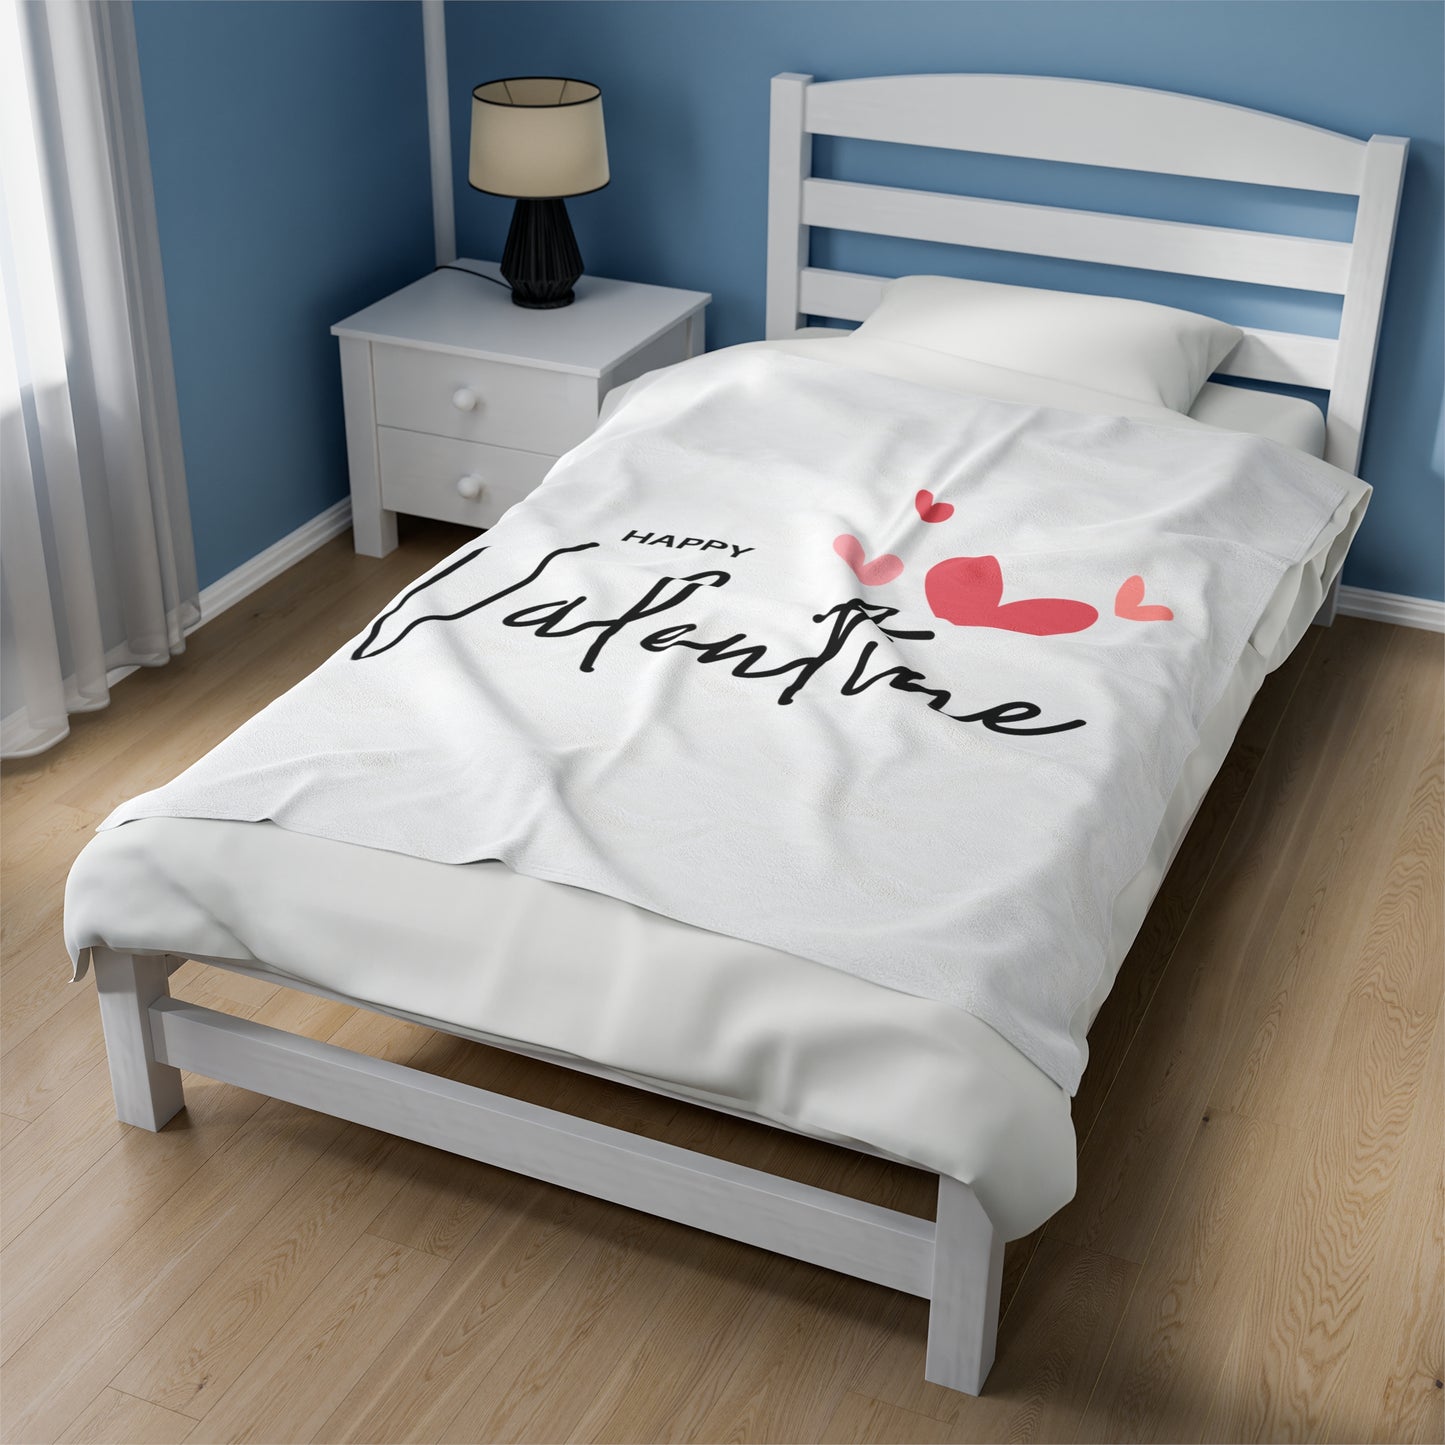 Happy Valentine with Hearts Printed Velveteen Plush Blanket